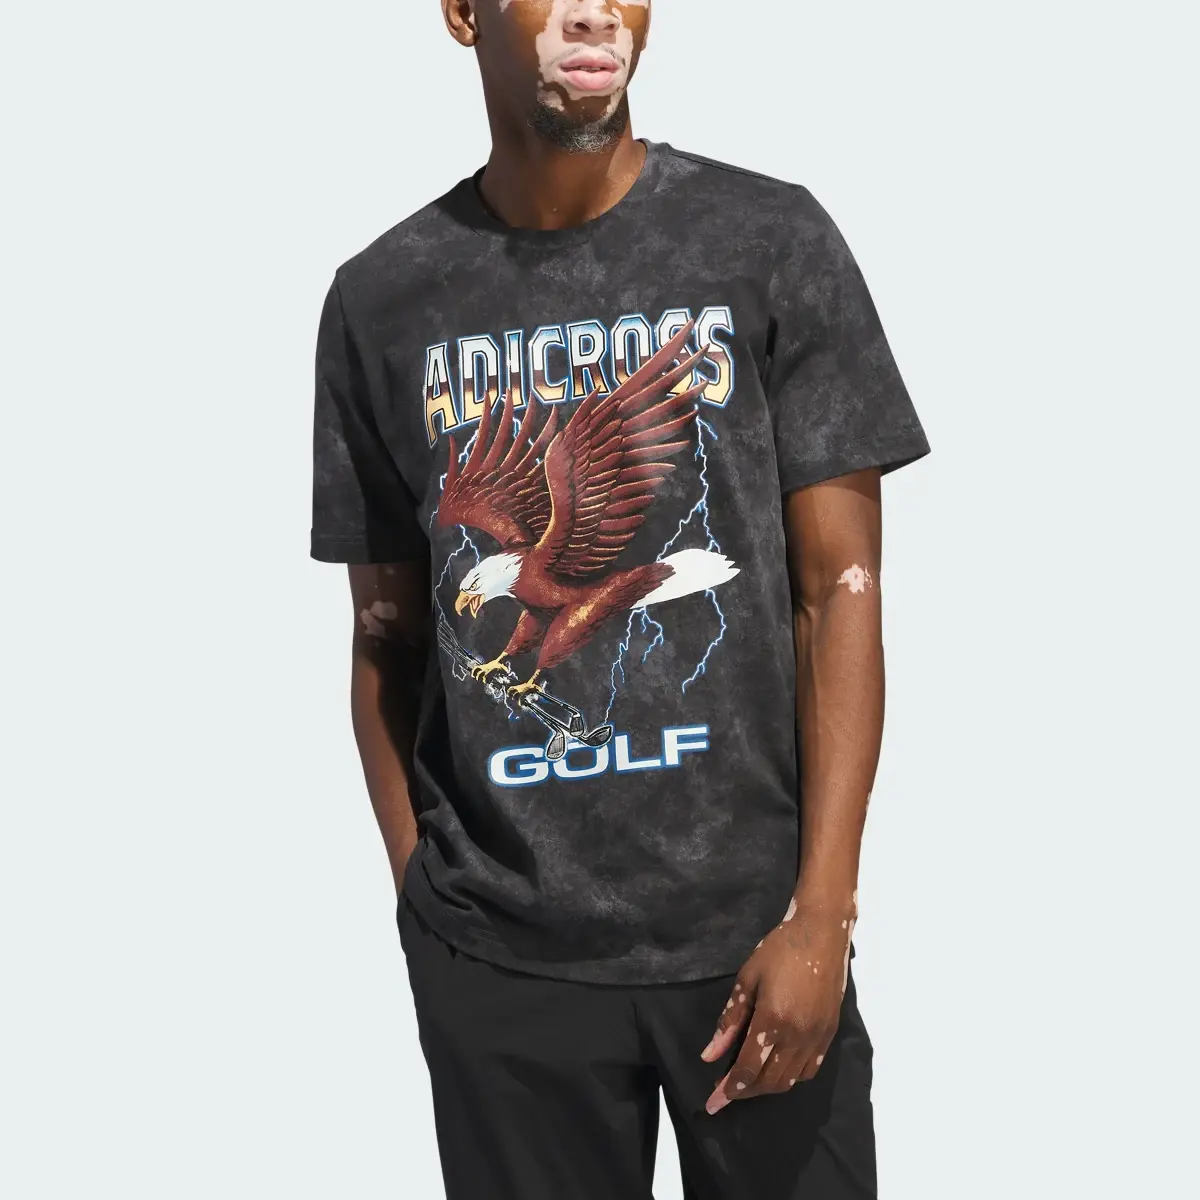 Adidas Koszulka Adicross Eagle Graphic. 1